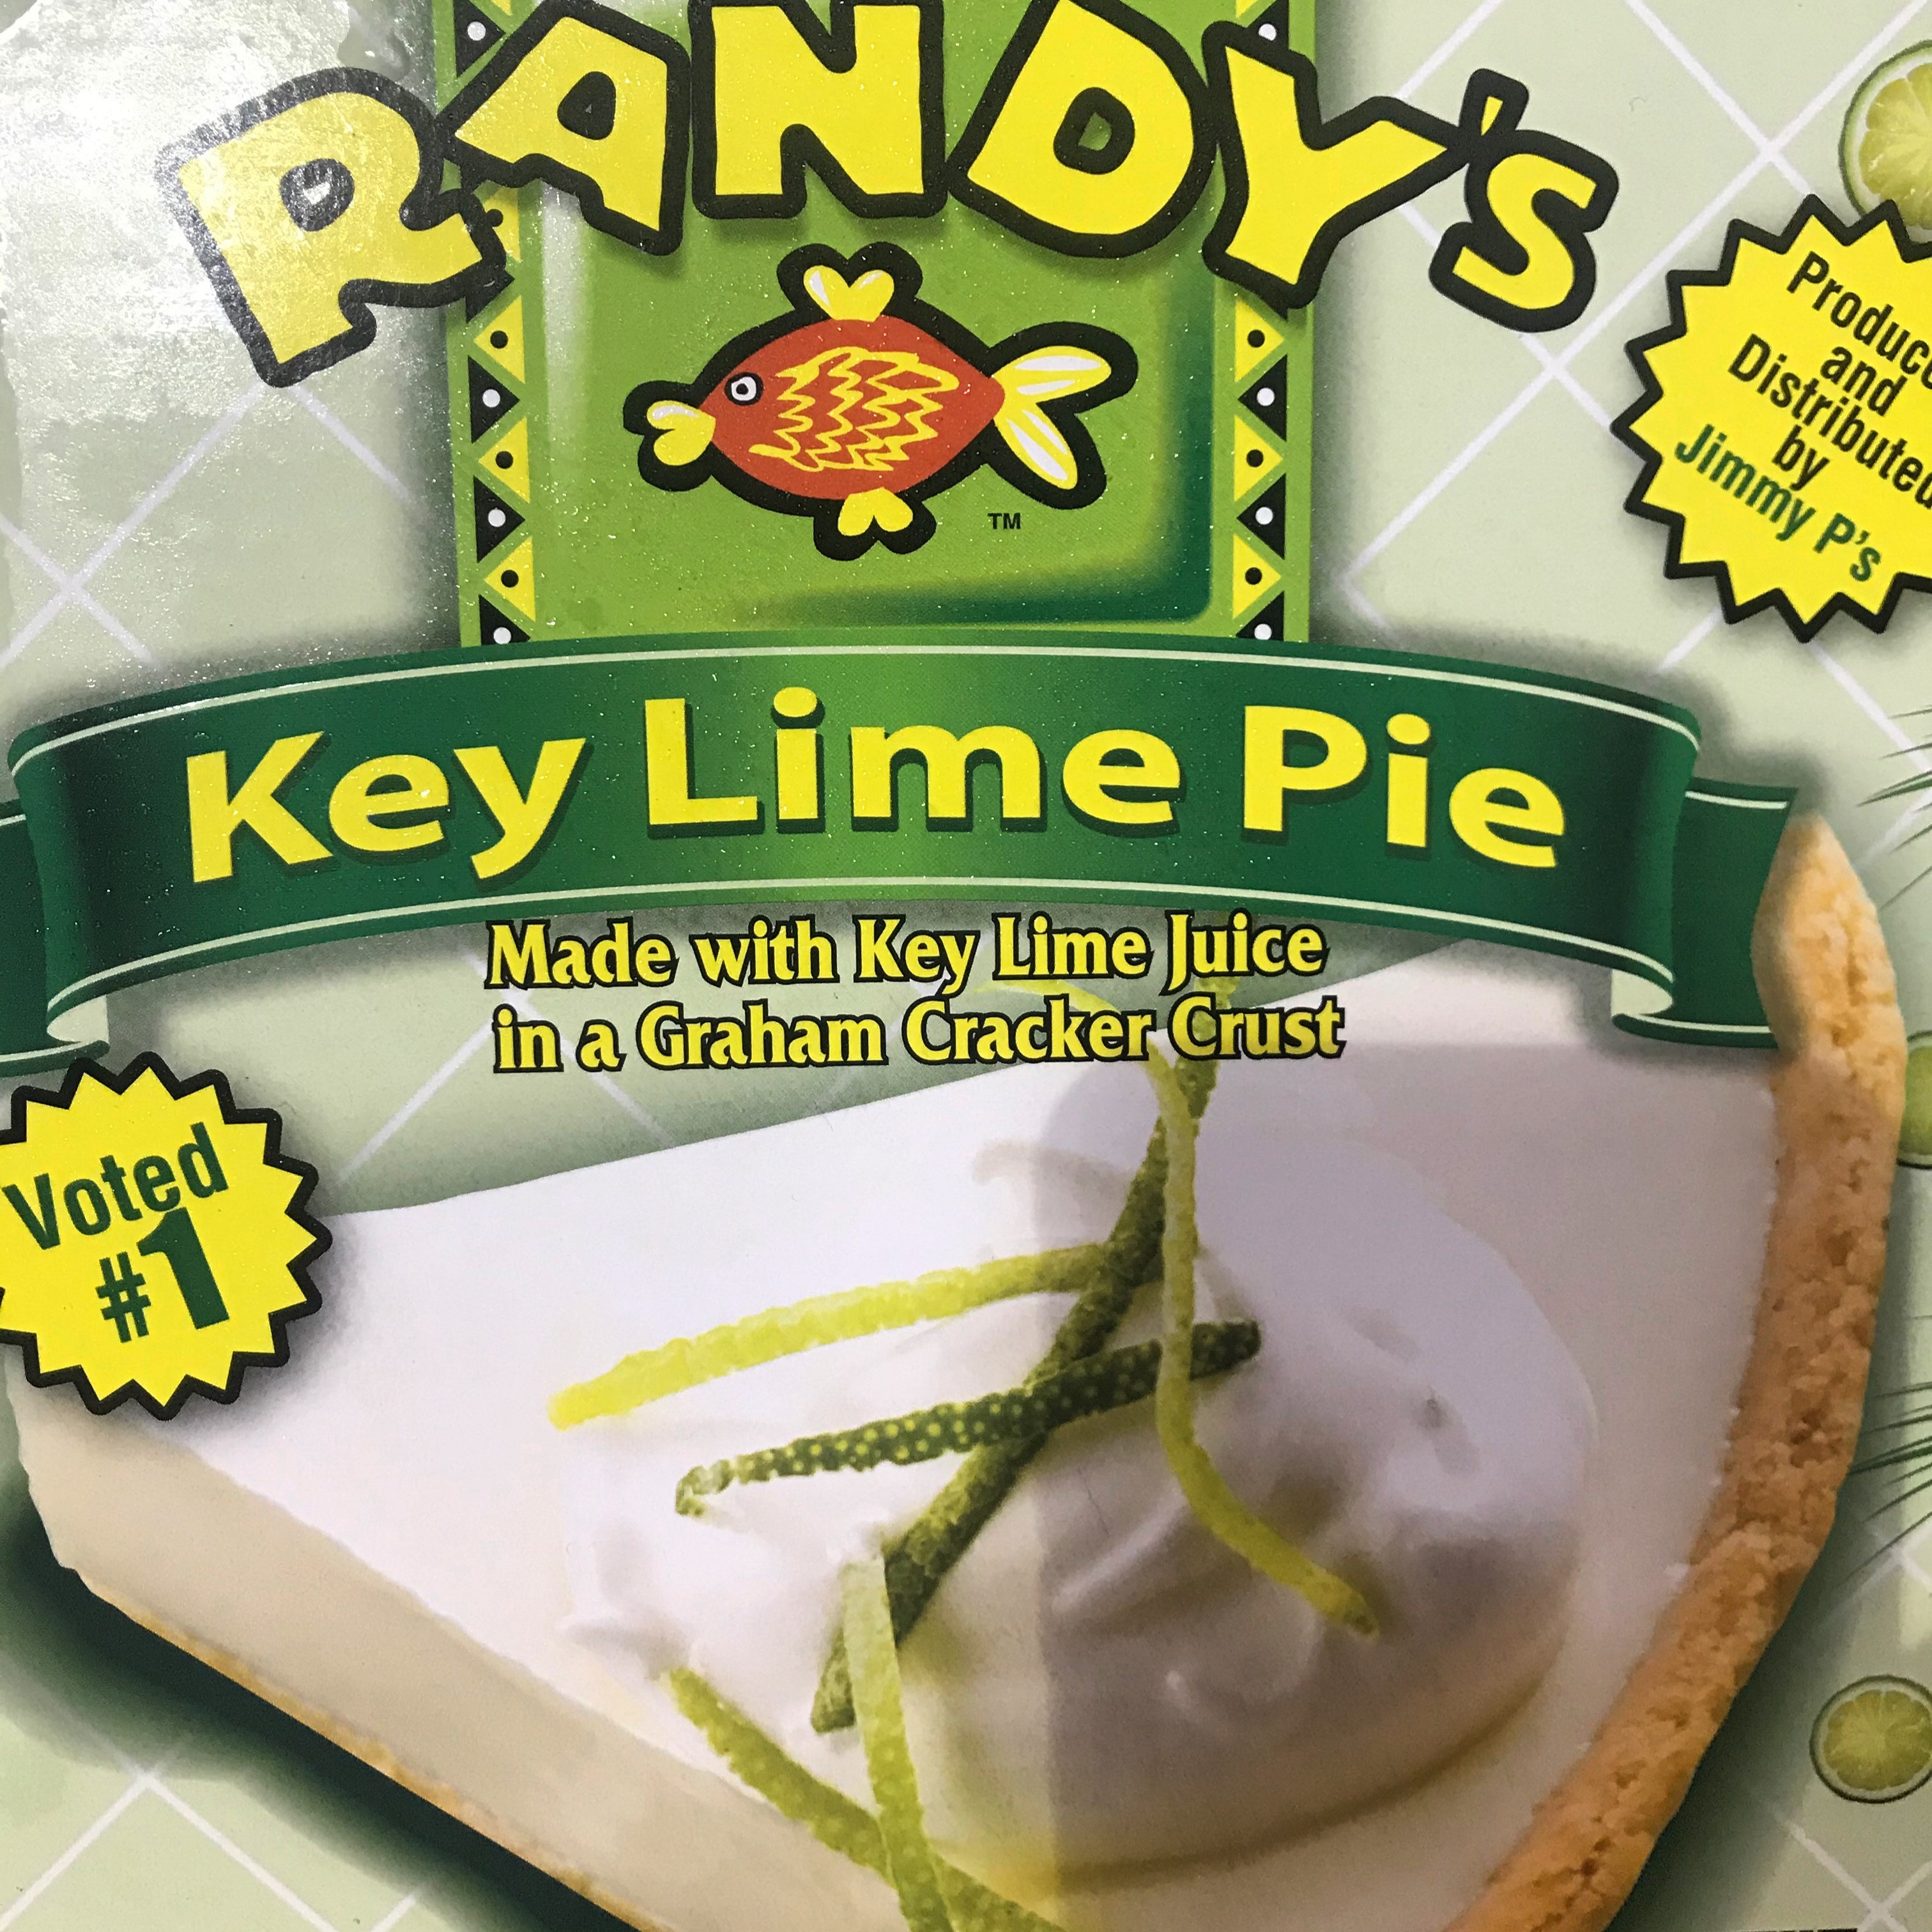 Randy's Key Lime Pie